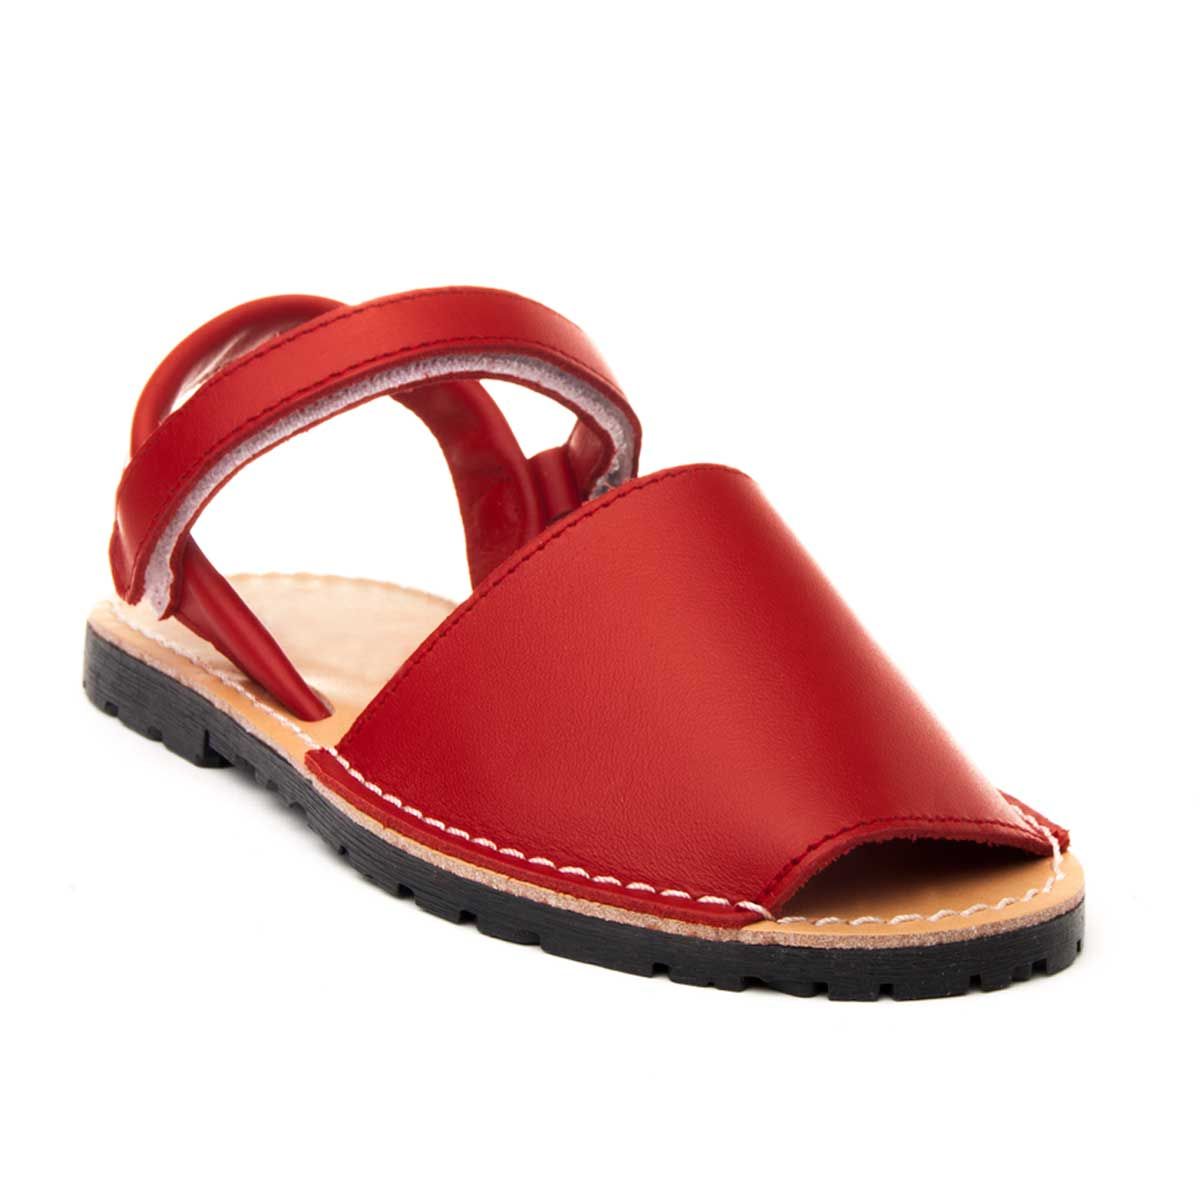 Purapiel Flat Sandal in Red